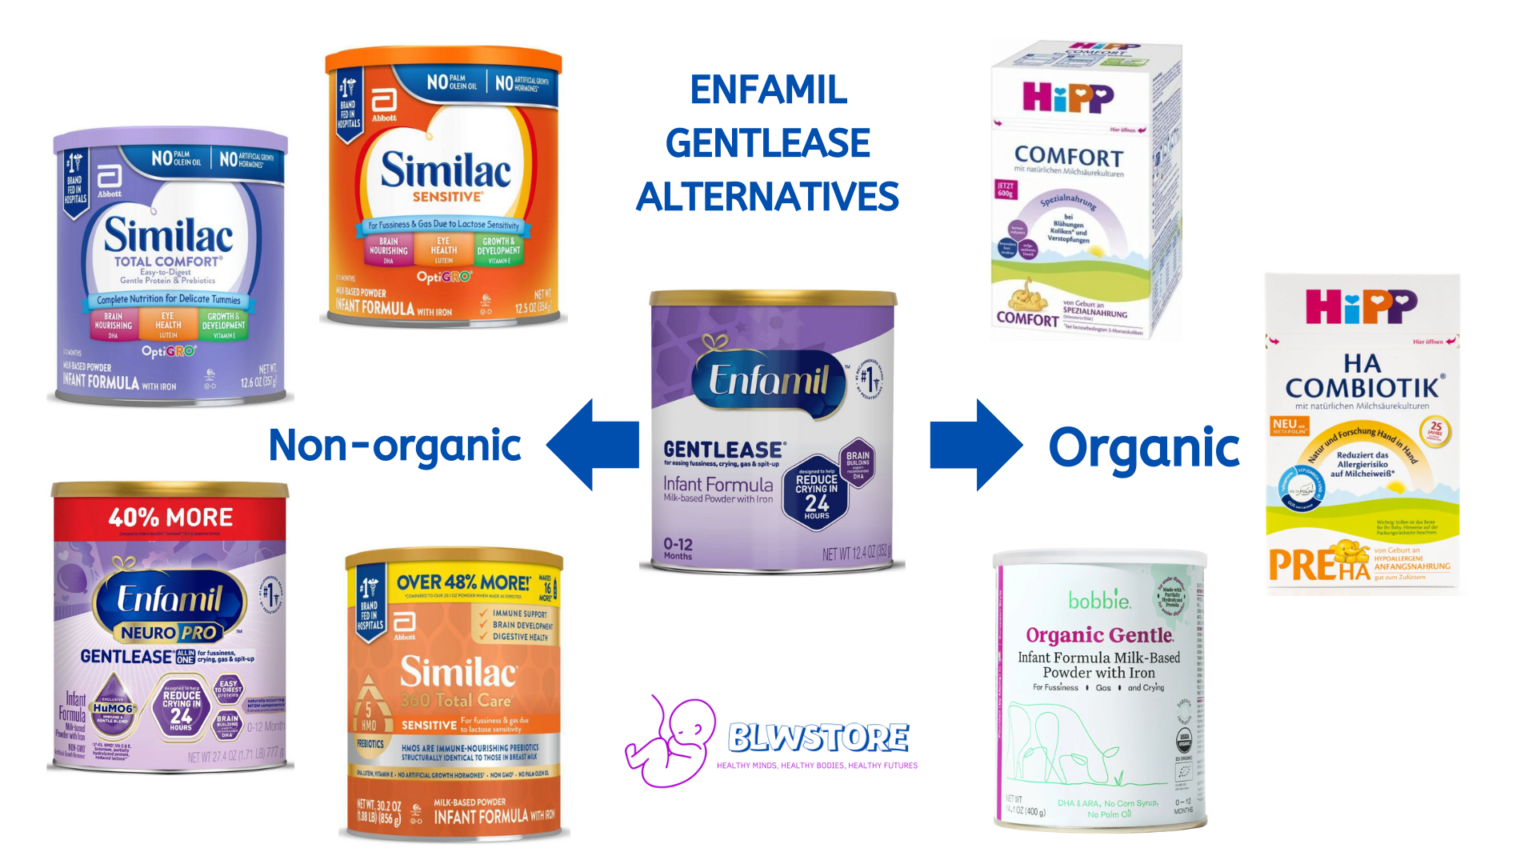 Enfamil-Gentlease-Alternatives-Organic-and-Non-Organic